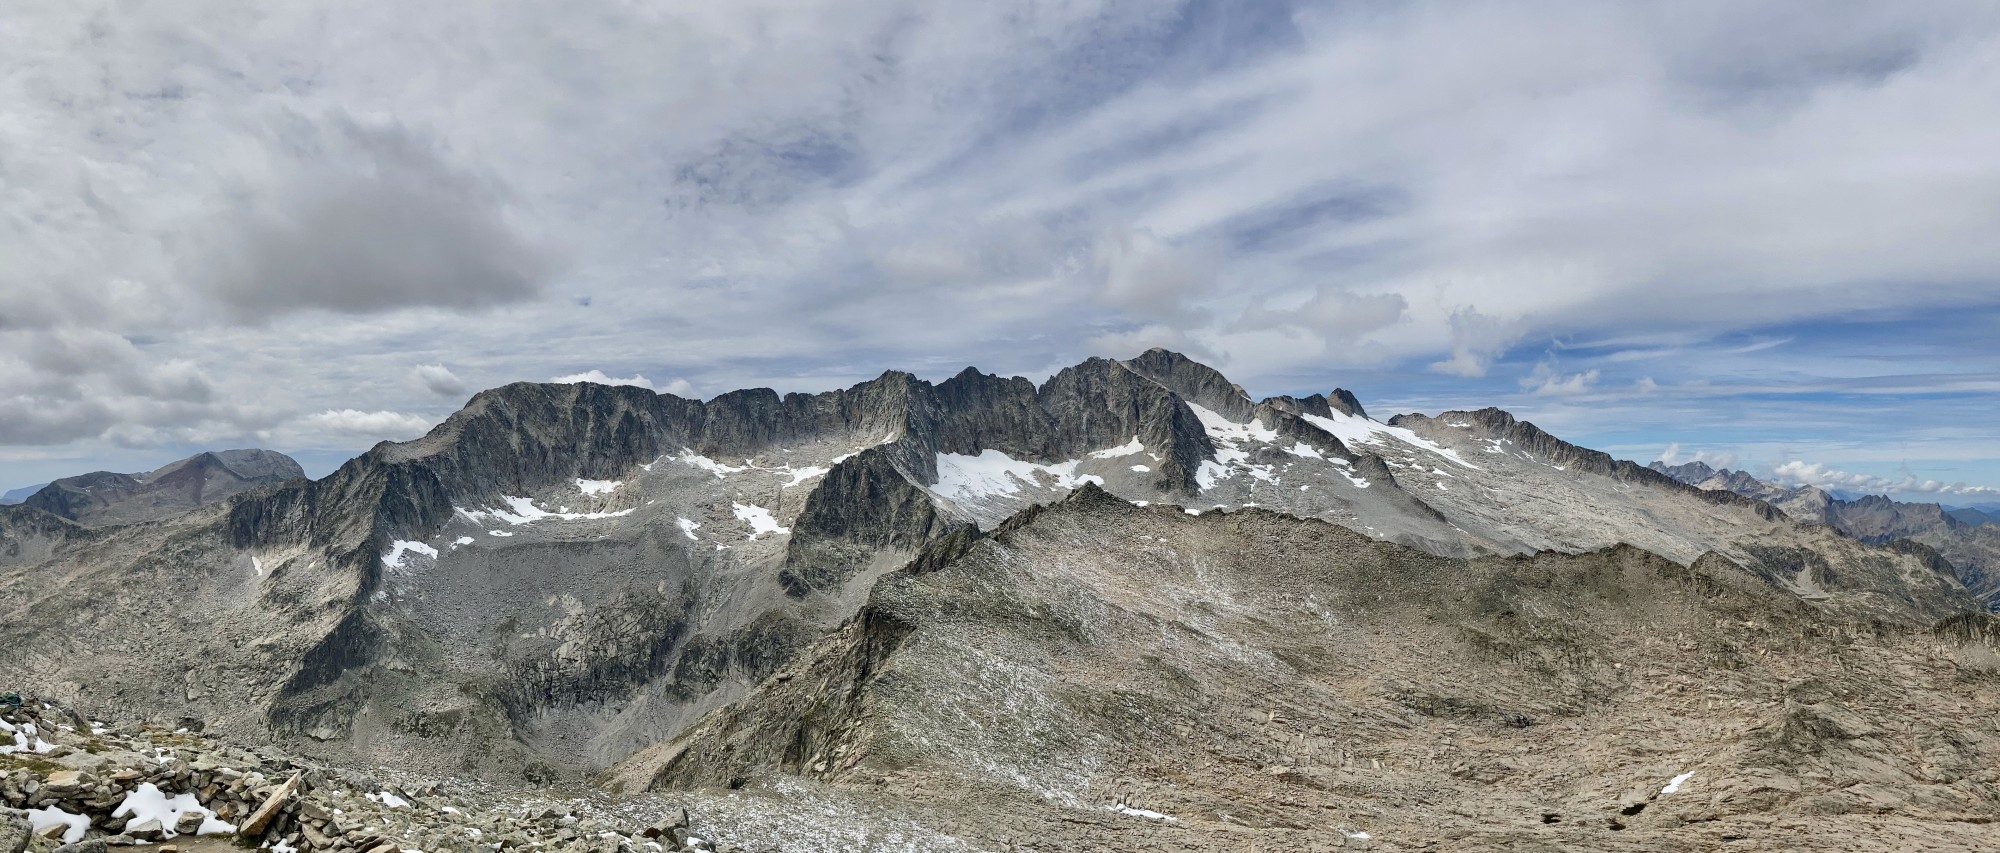 Panorama of Aneto massif